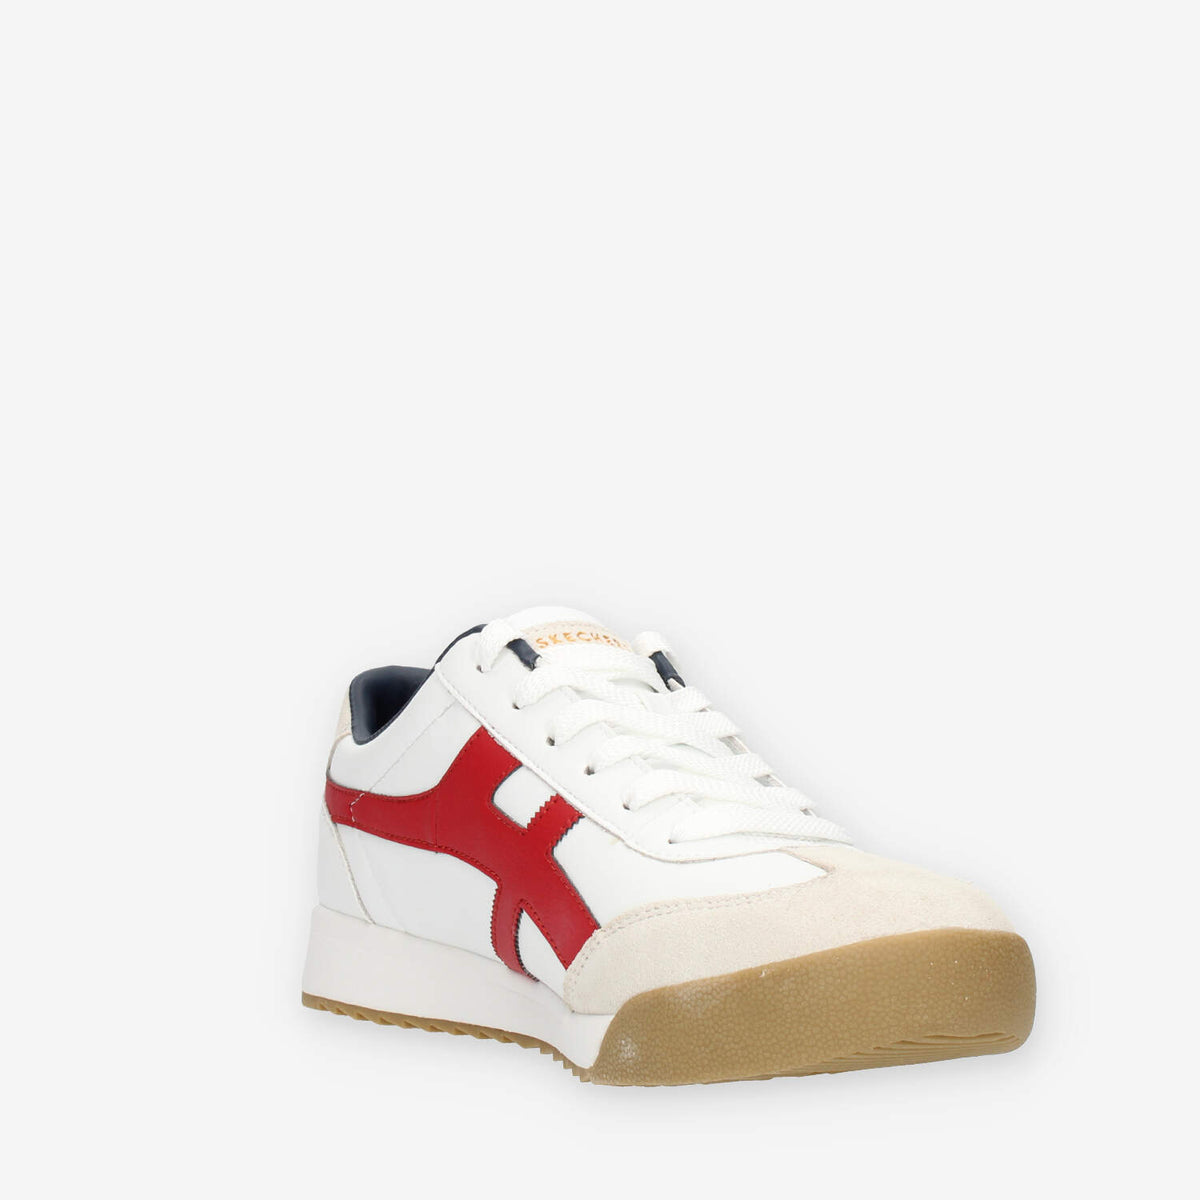 Skechers Manzanilla Sneakers bianche e rosse